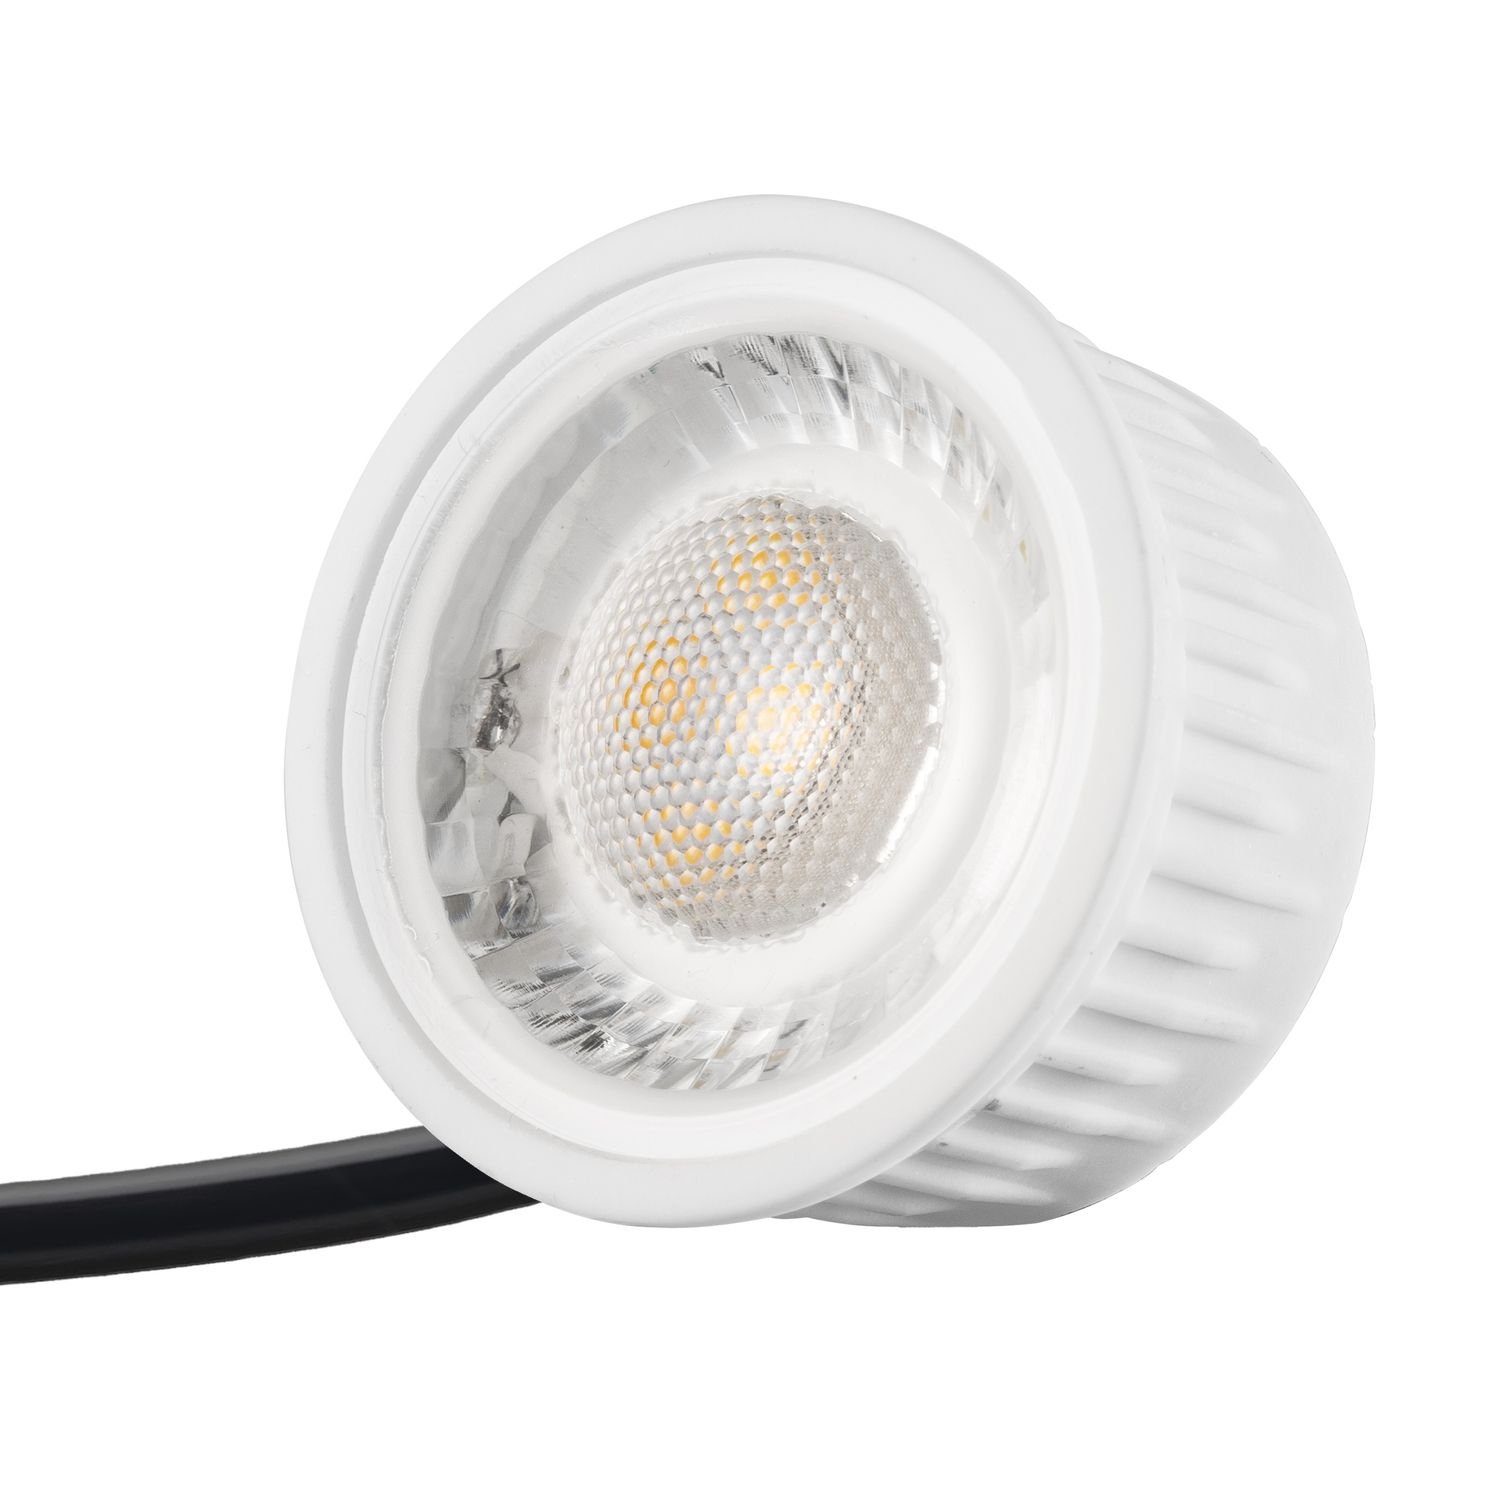 LEDANDO LED Einbaustrahler 10er LED Einbaustrahler extra matt in 5W mit weiß flach Set Leuchtmitt